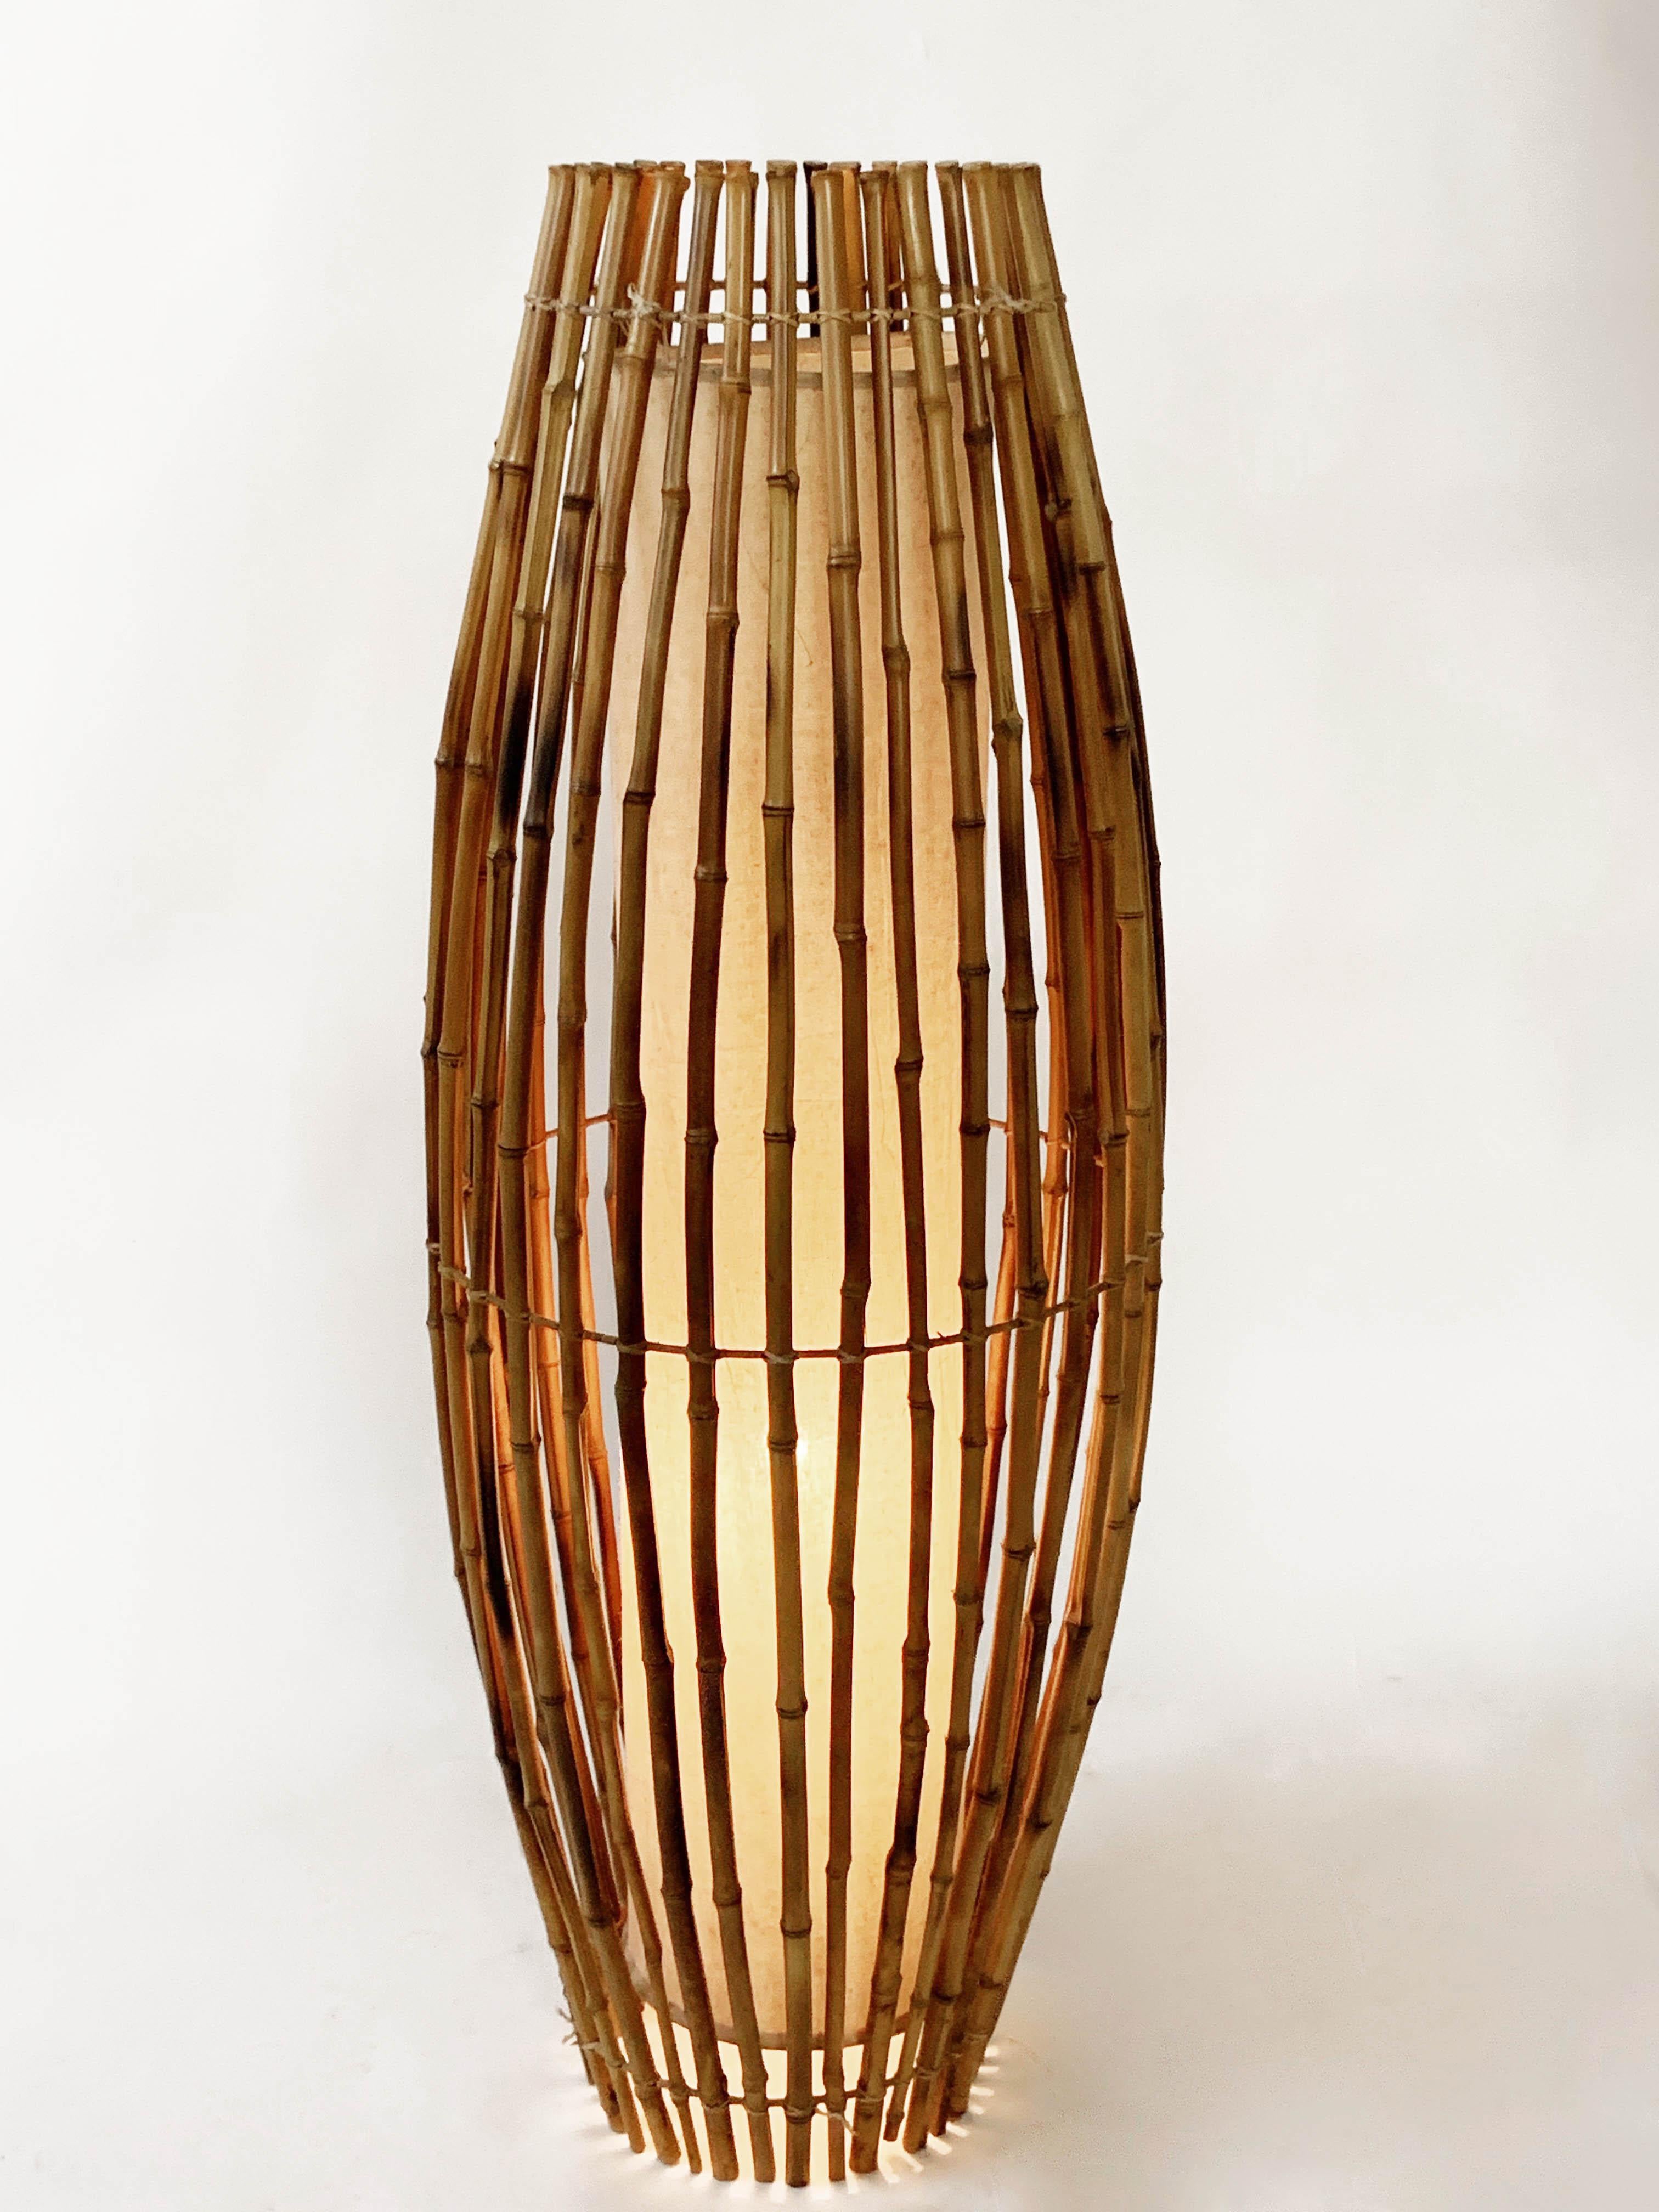 20th Century Midcentury Bamboo and Rattan Italian Floor Lamp after Franco Albini, 1960s